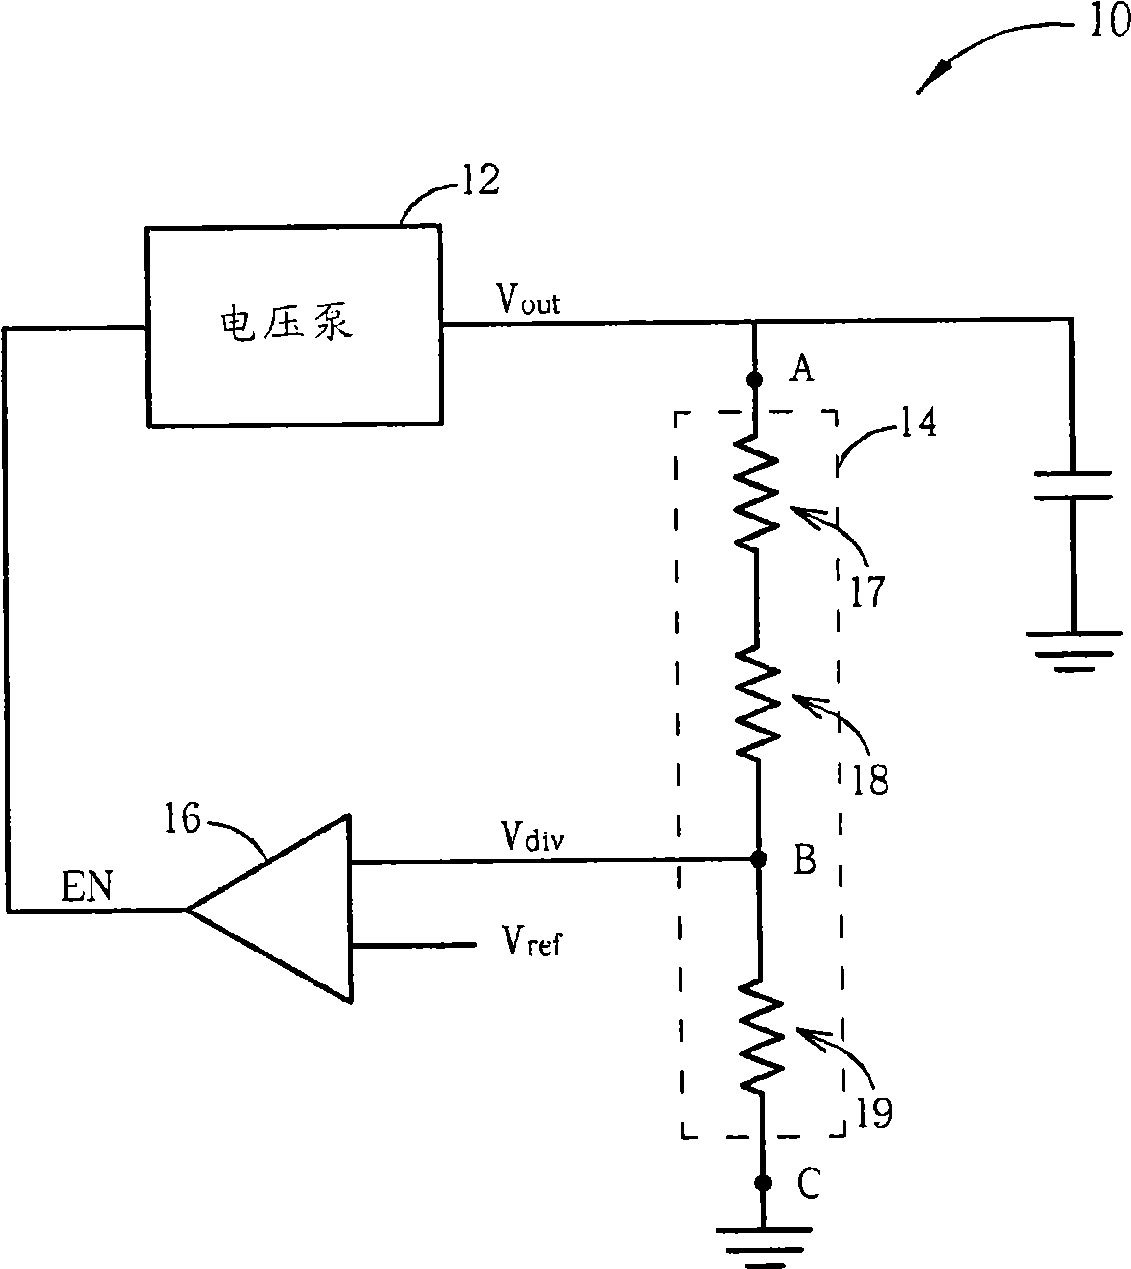 Voltage generator with dynamic resistance feedback control